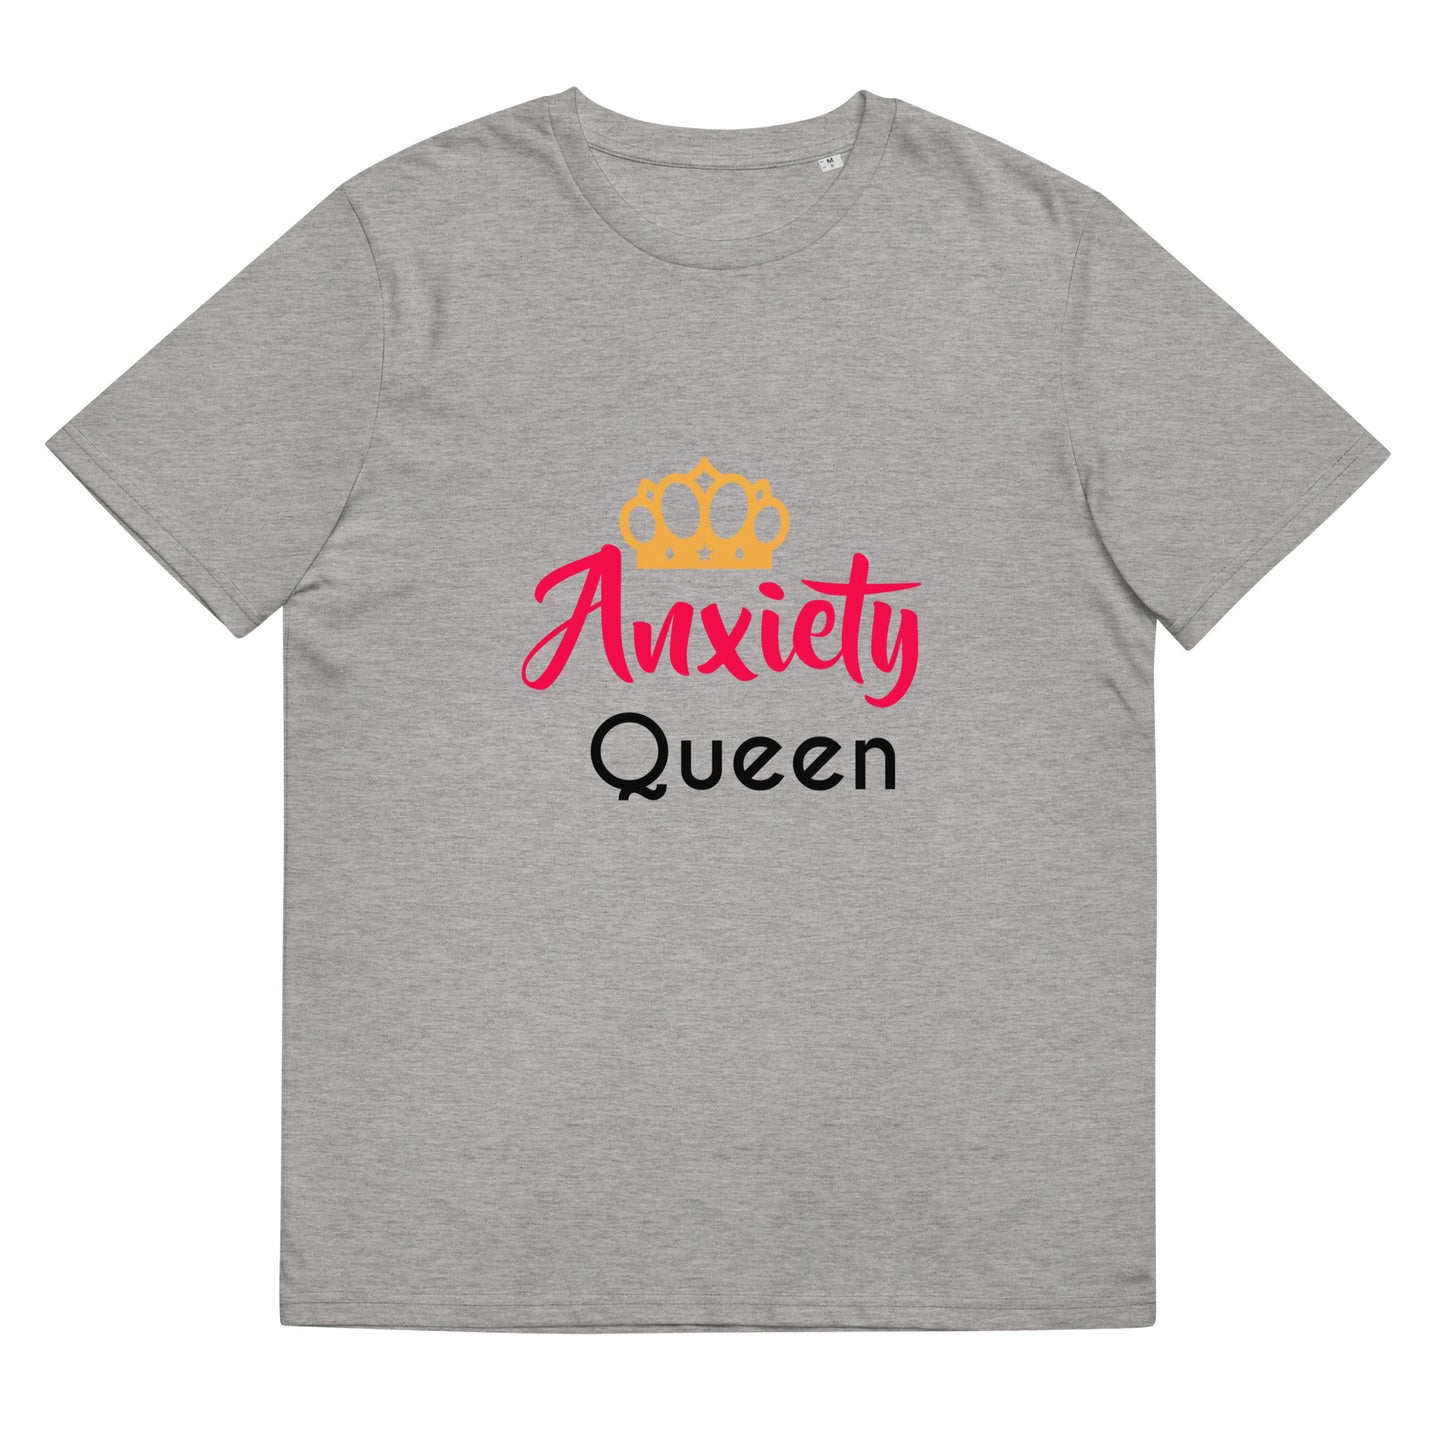 Anxiety Queen Unisex organic cotton t-shirt